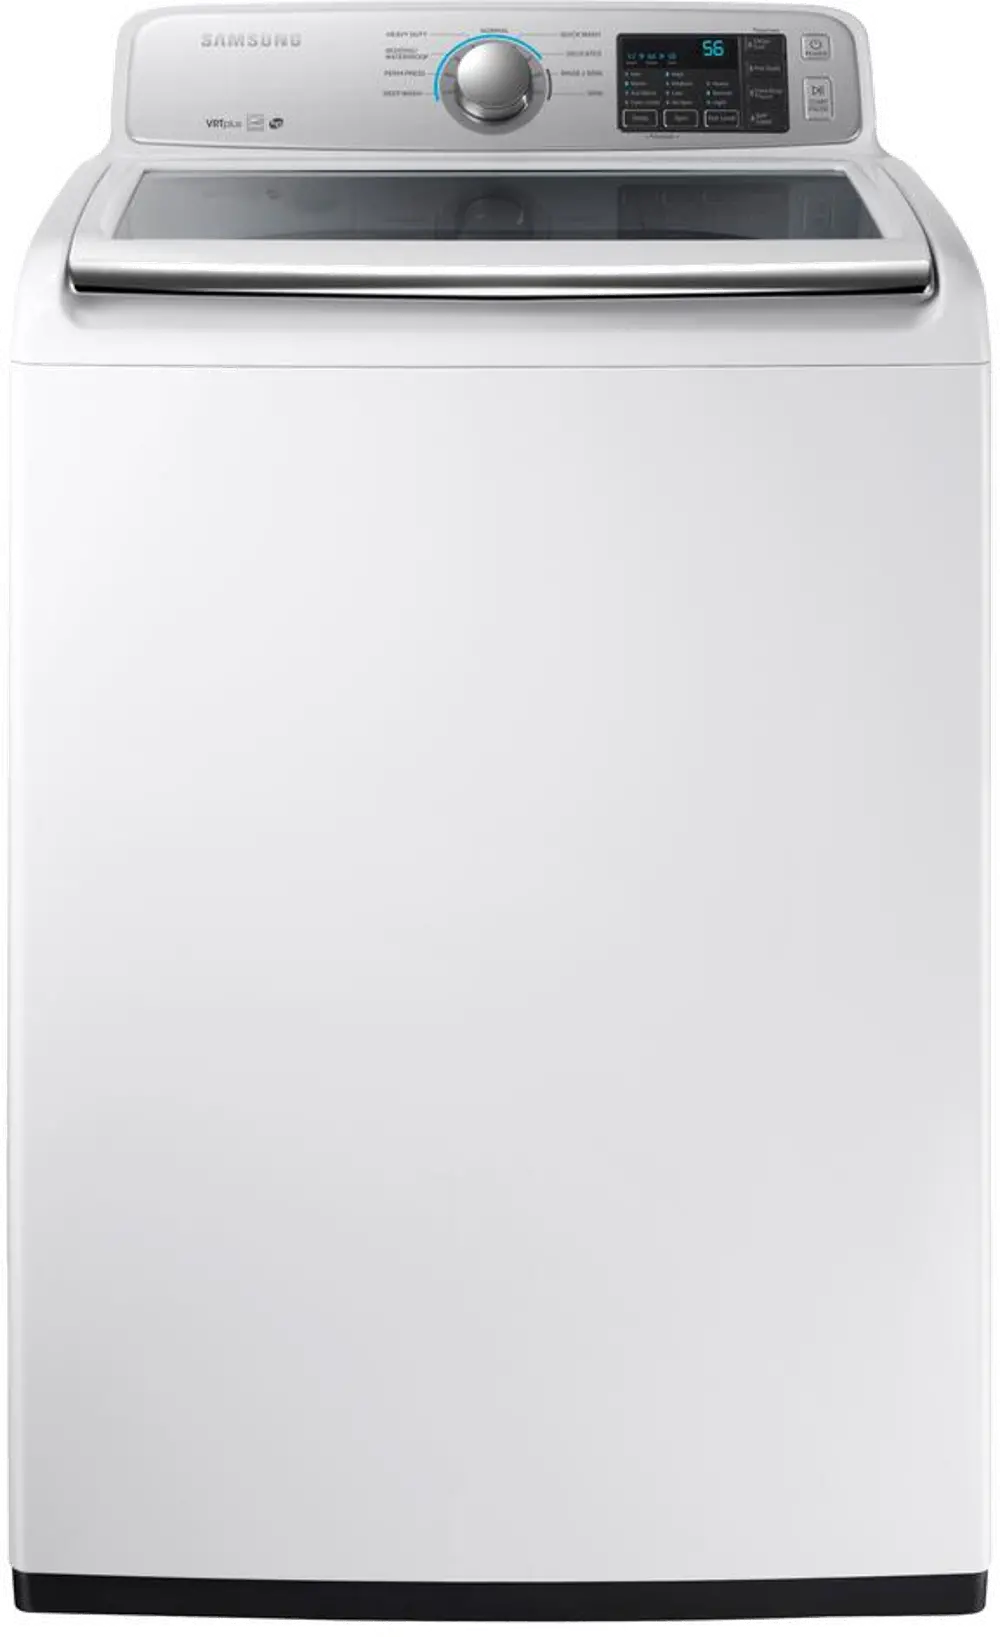 WA45K7600AW Samsung 4.5 cu. ft. Top Load Washer - White-1